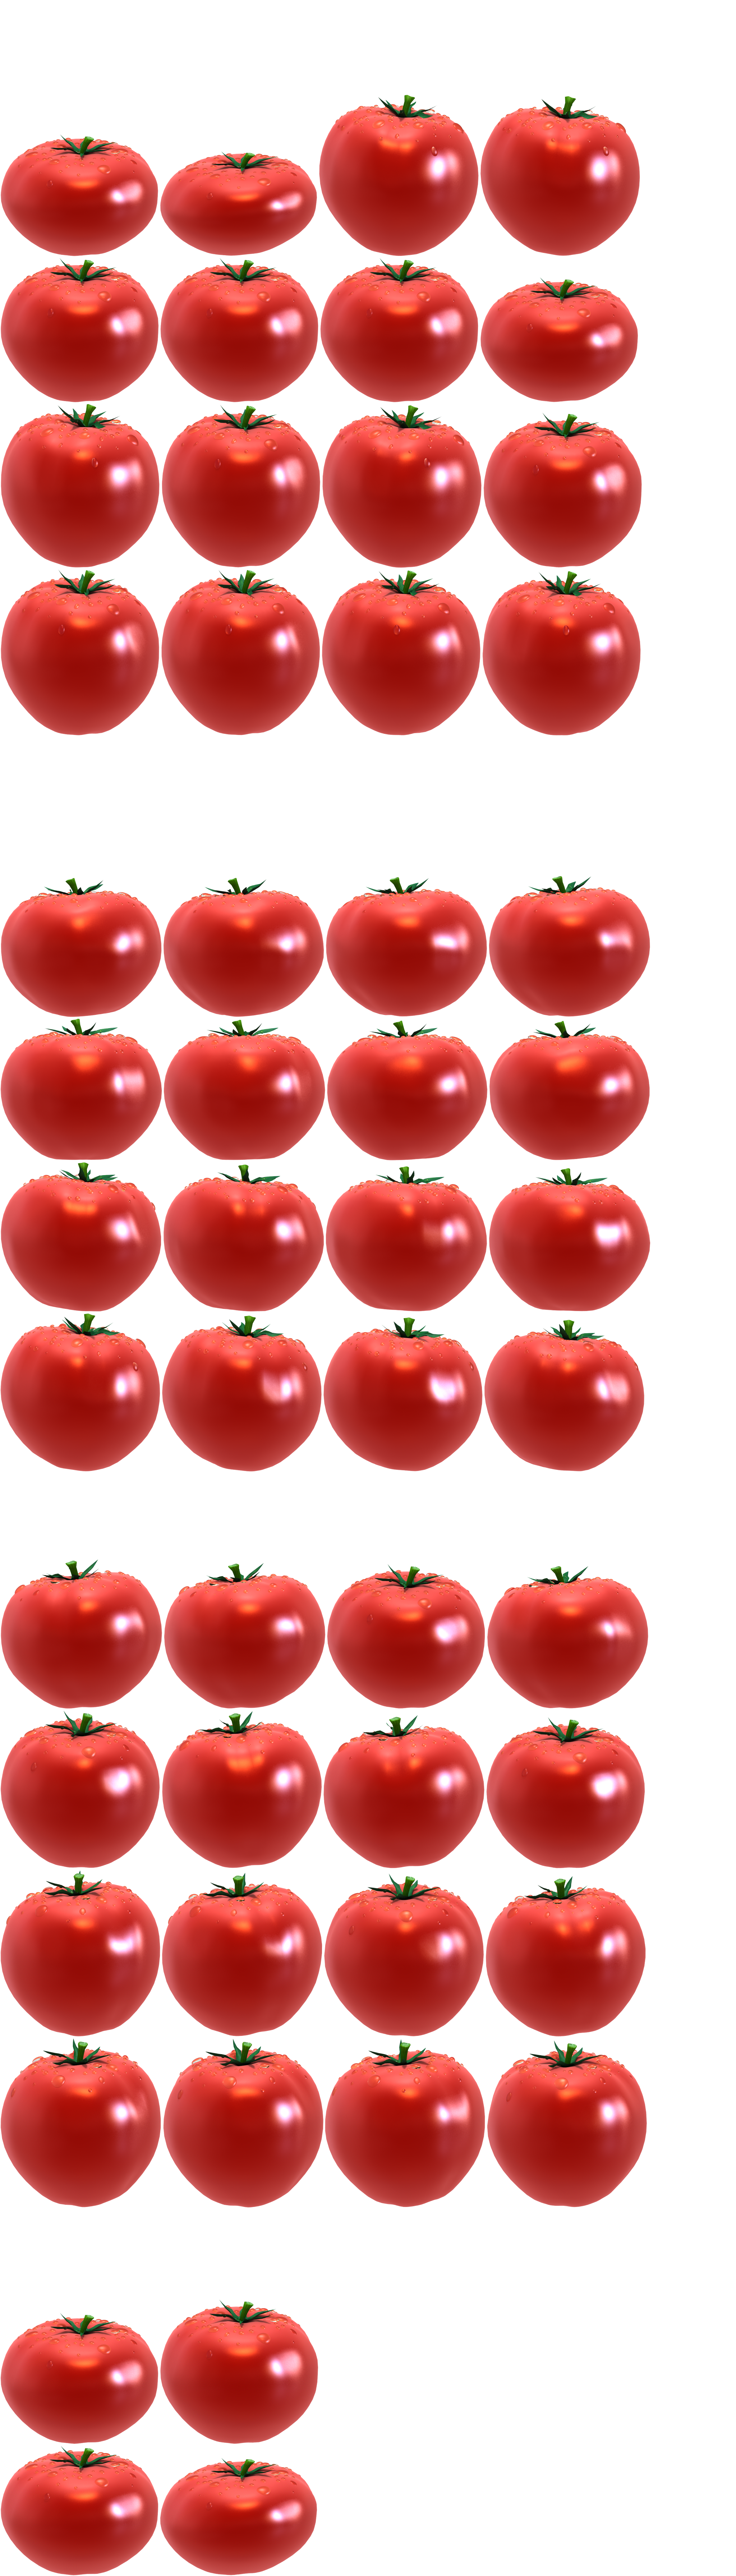 KID PIX 5: The STEAM Edition - Tomato